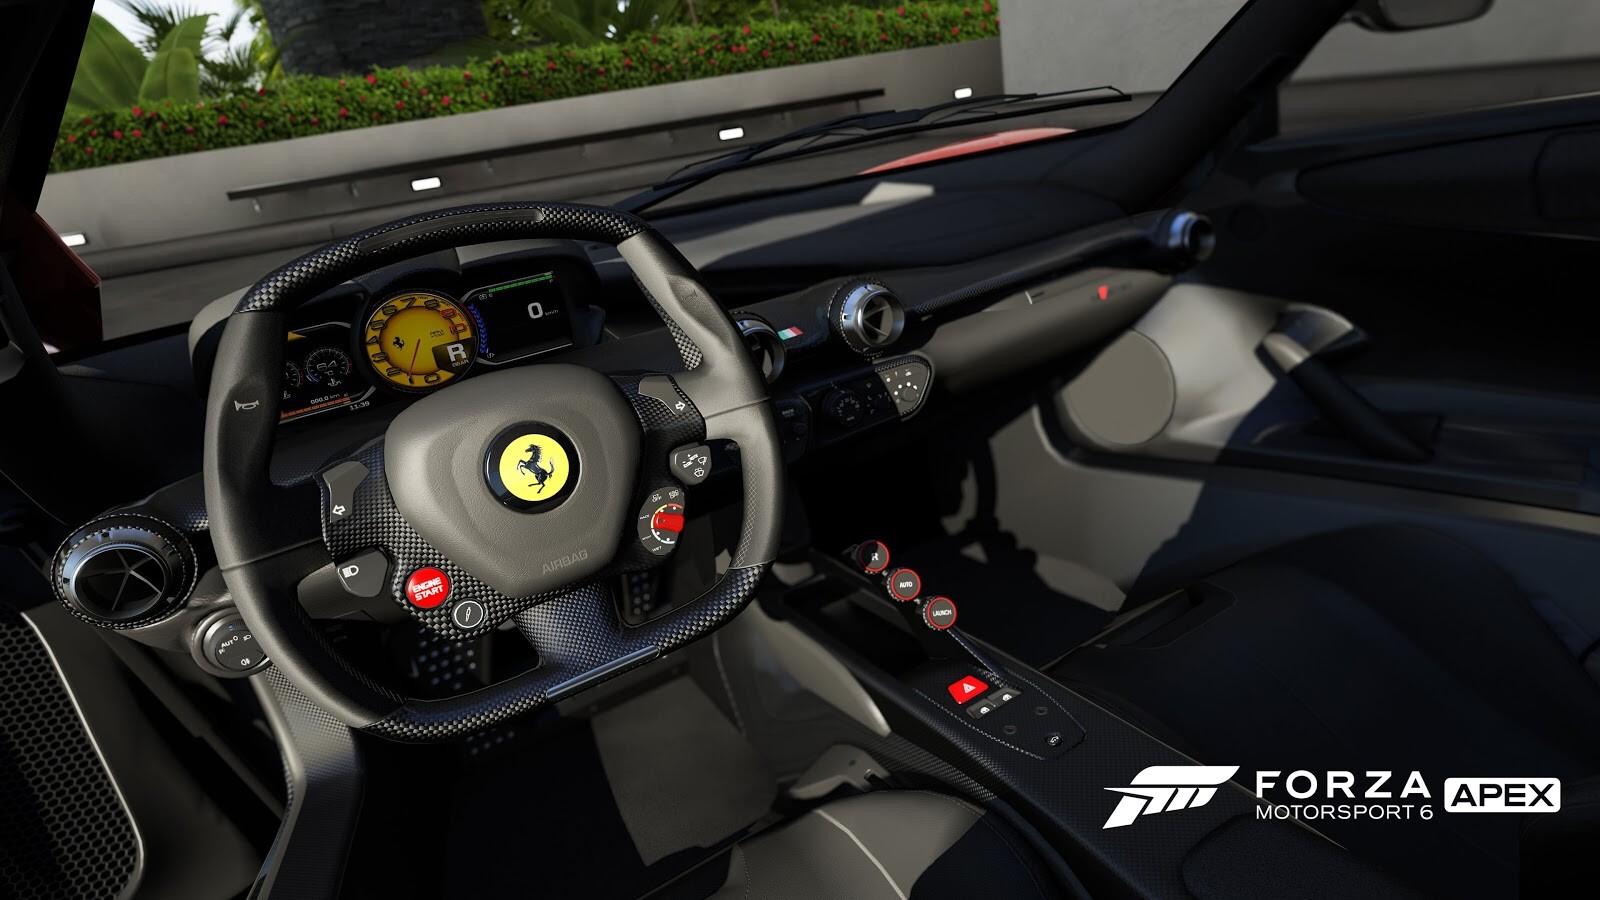 Video Game Forza Motorsport 6: Apex HD Wallpaper